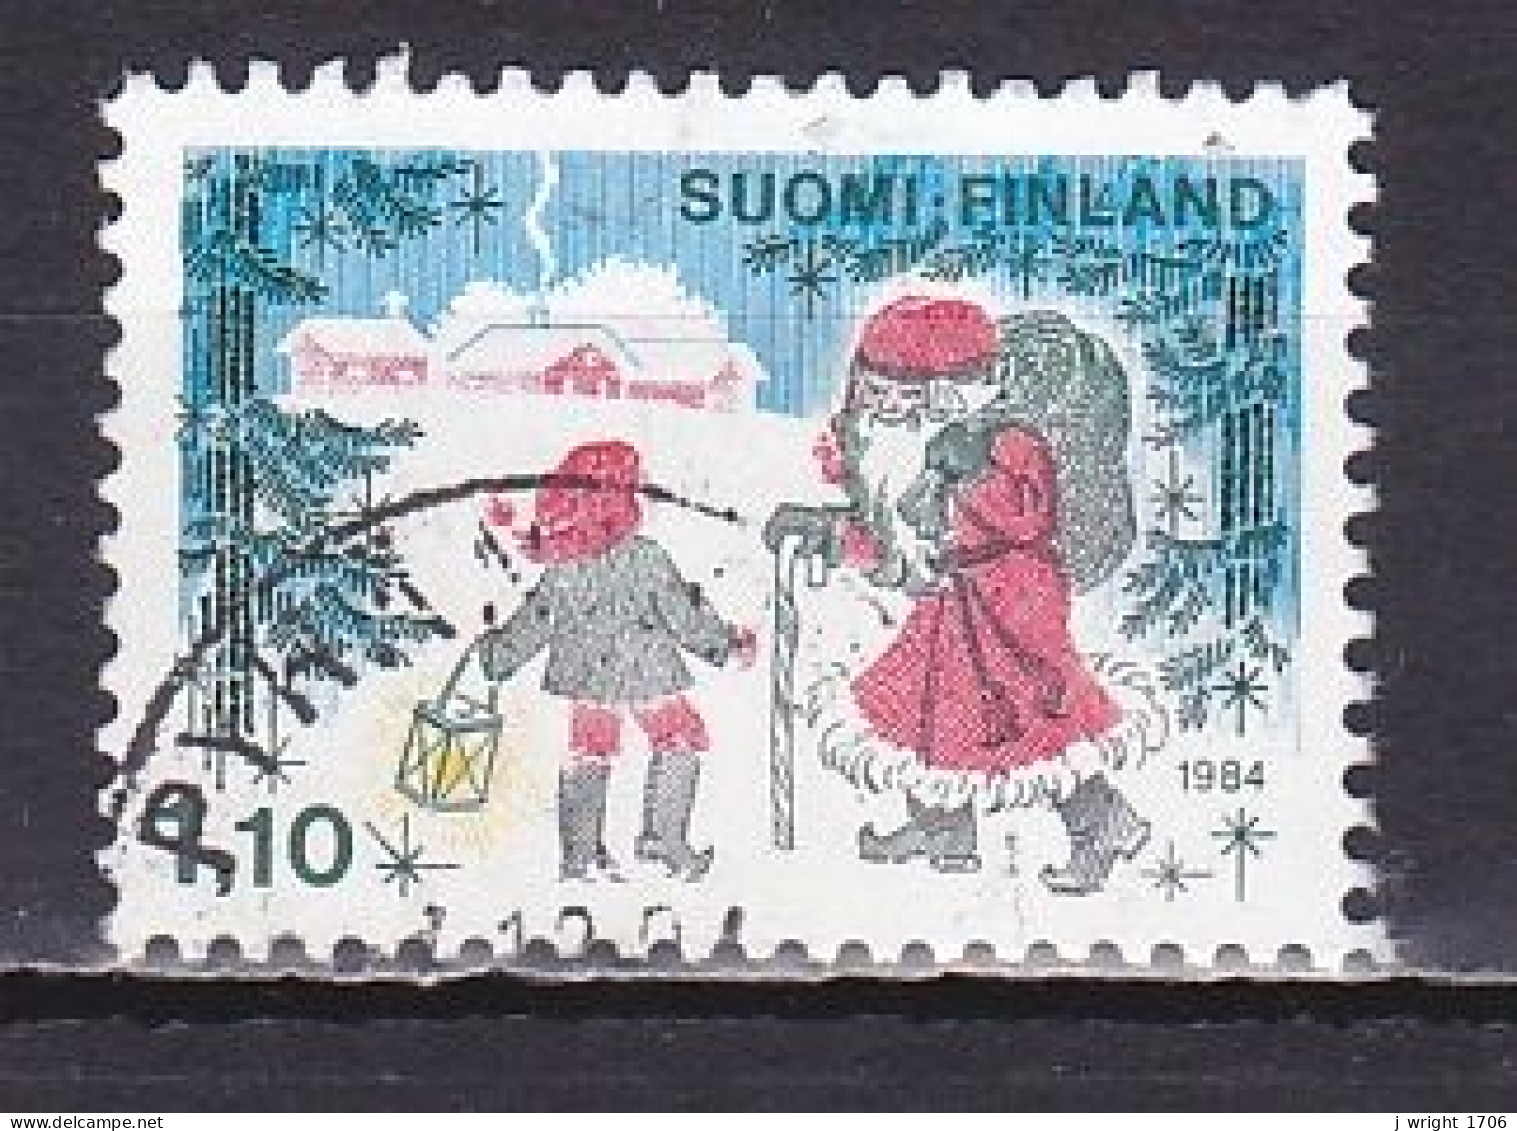 Finland, 1984, Christmas, 1.10mk, USED - Oblitérés